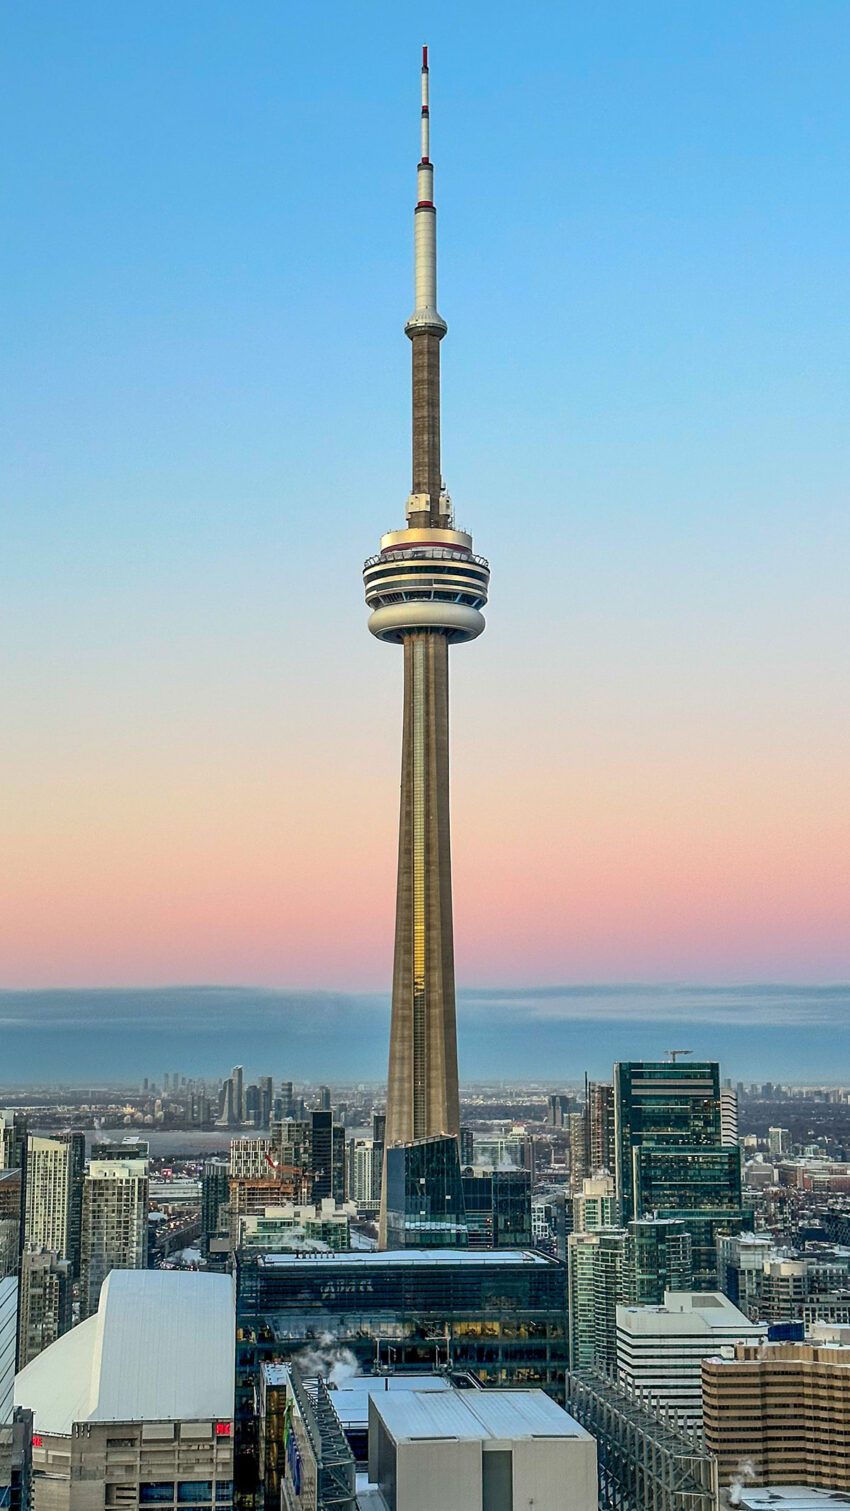 CN Tower in Toronto view from below. Photographer: Devindra Sookar